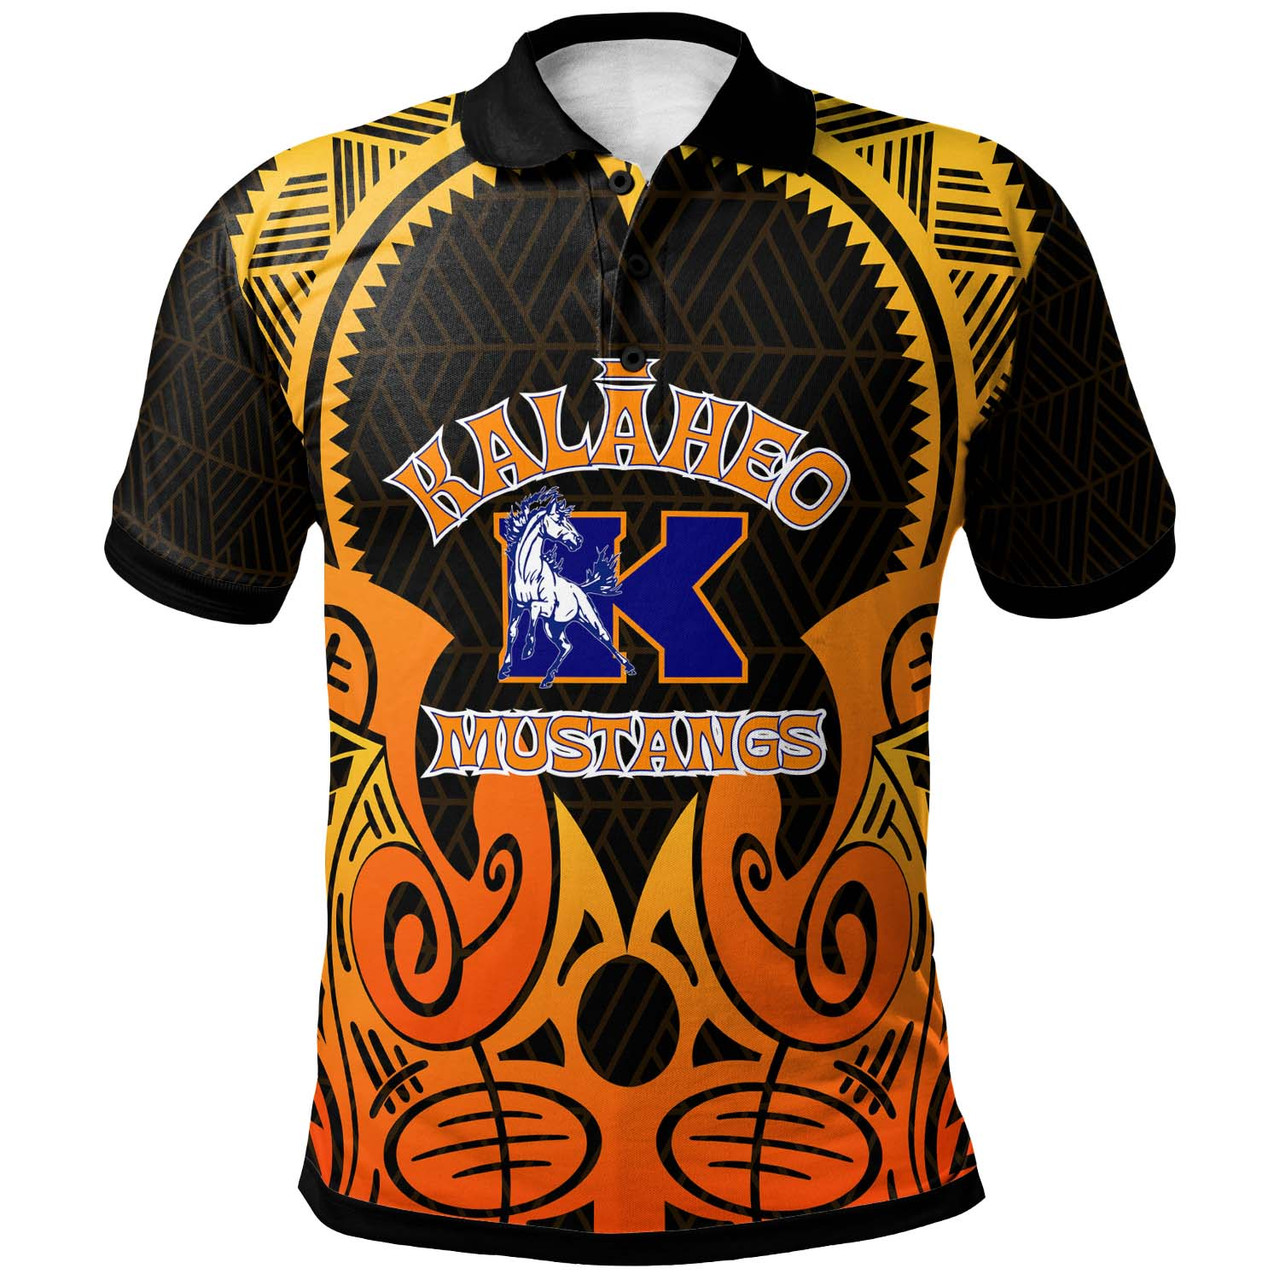 Hawaii Custom Polynesian Polo Shirt - Kalaheo High School with Tribal Patterns